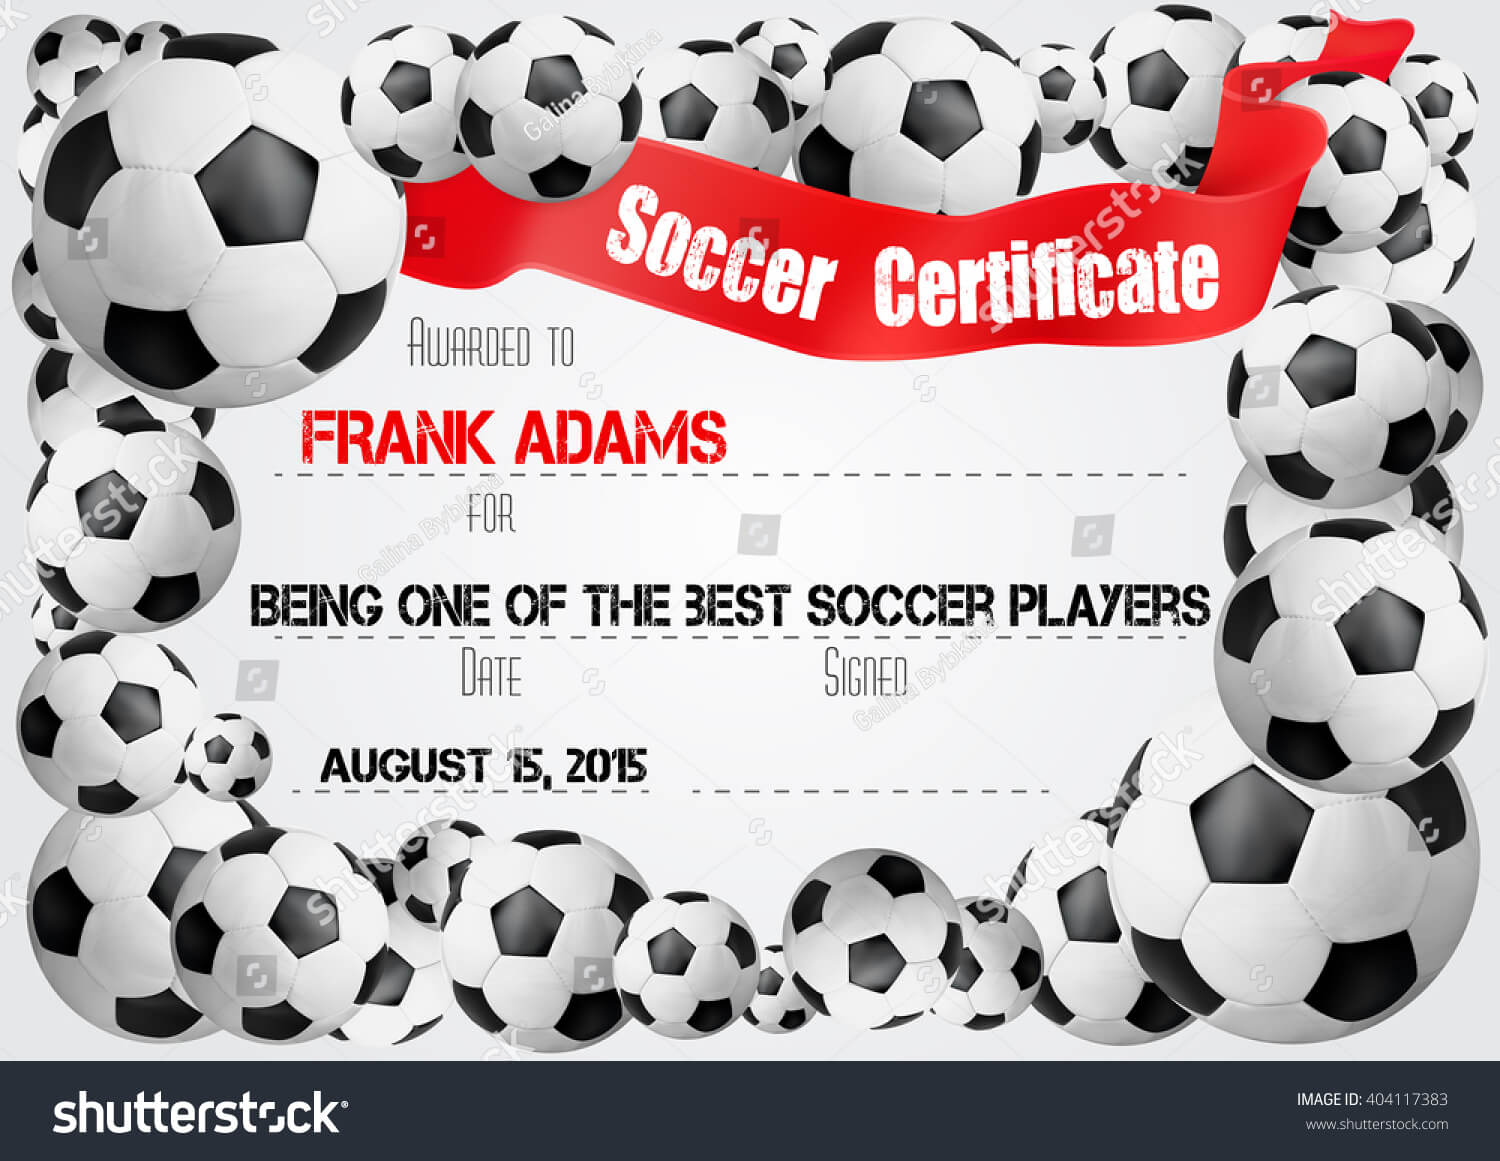 Soccer Certificate Template Football Ball Icons Stock Vector Regarding Soccer Certificate Template Free